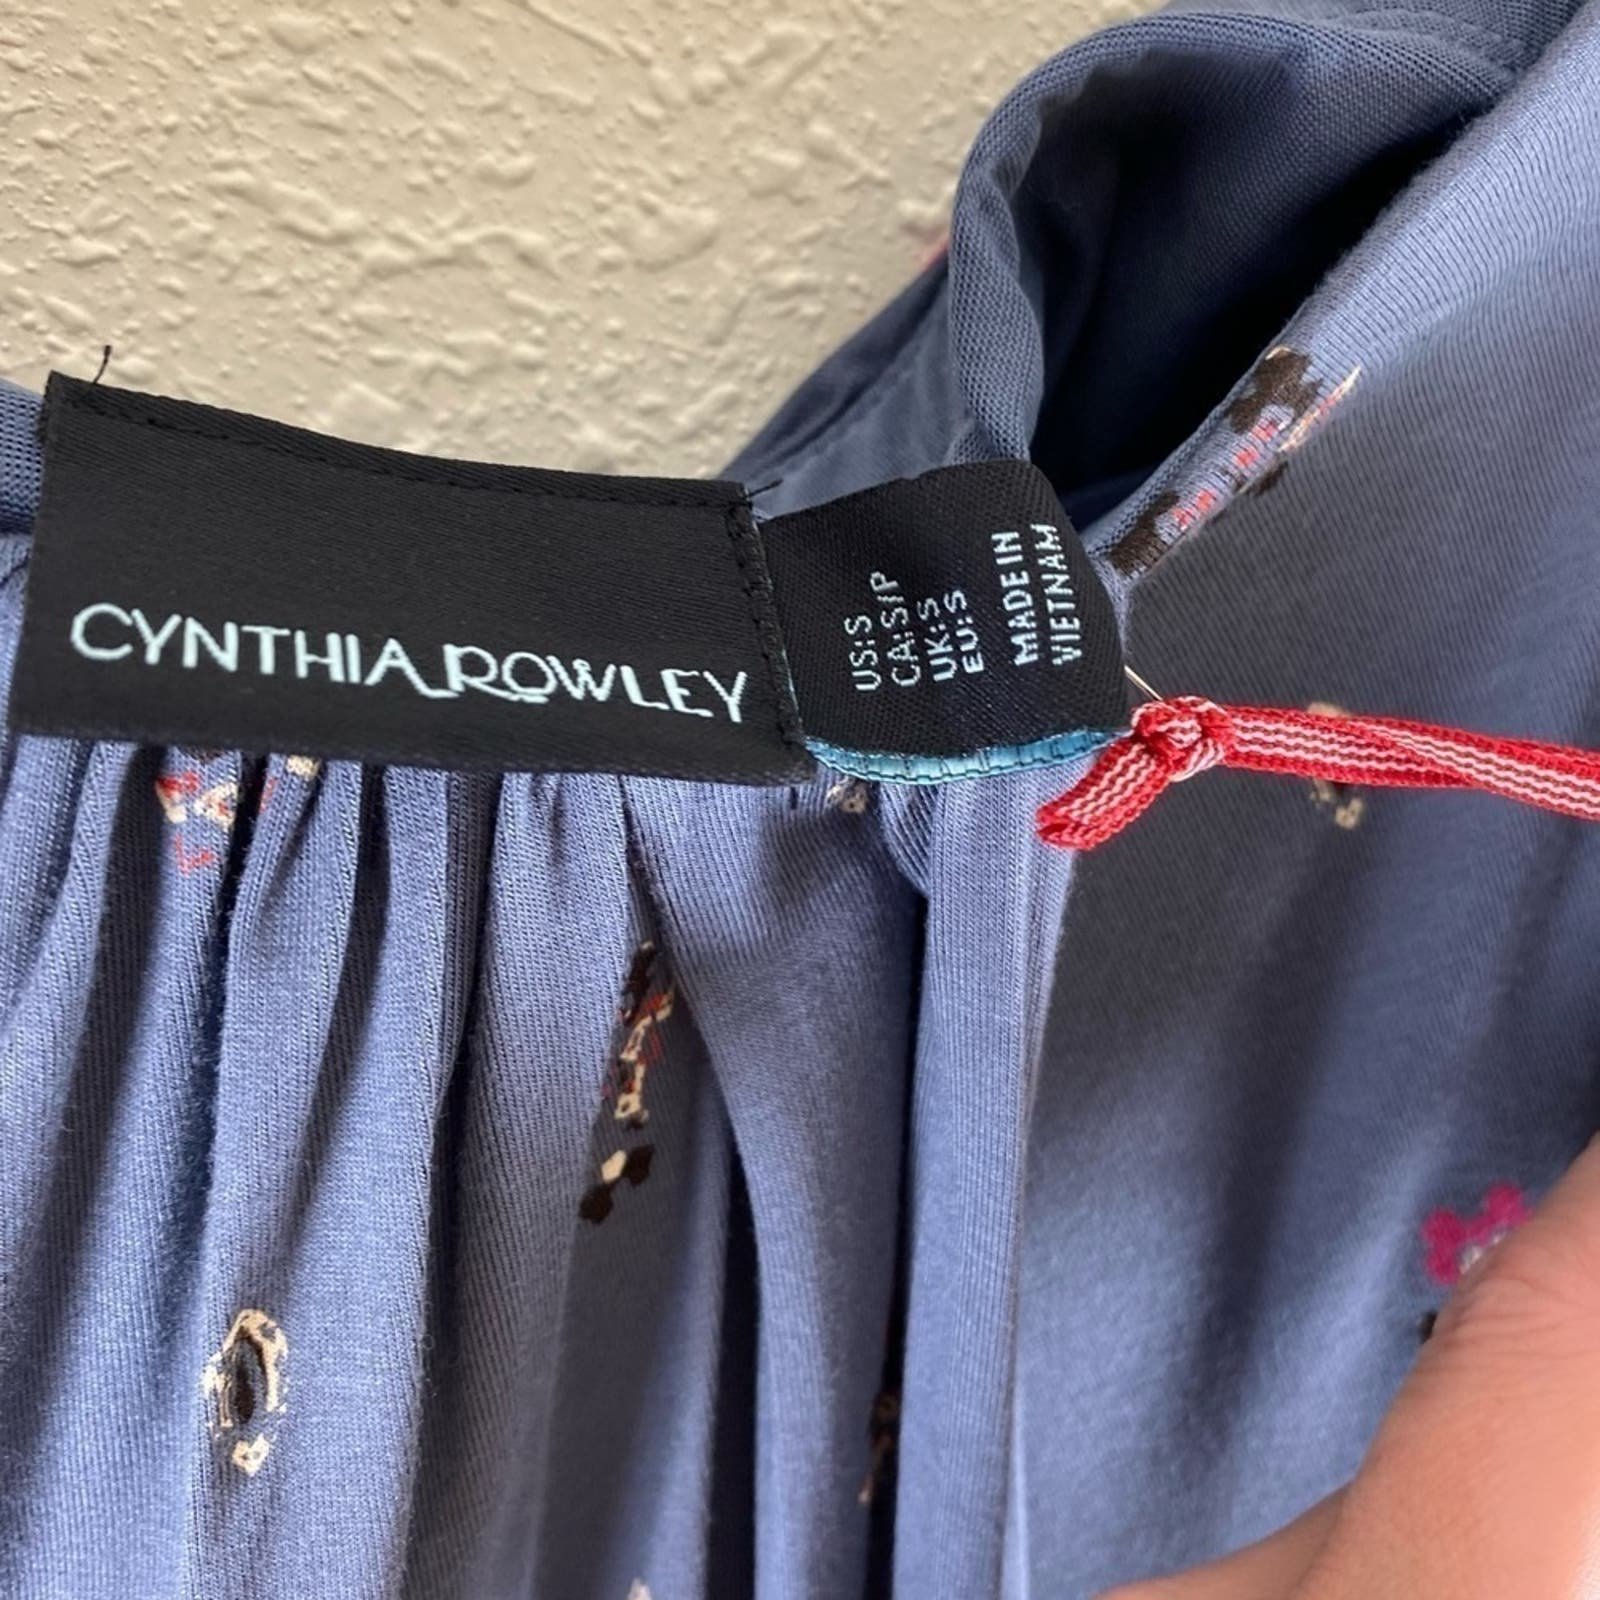 Buy Cynthia Rowley NWT Blue Faux Wrap Jersey Knit Maxi Skirt Pink Floral Print Sz S mYSMG5V83 no tax